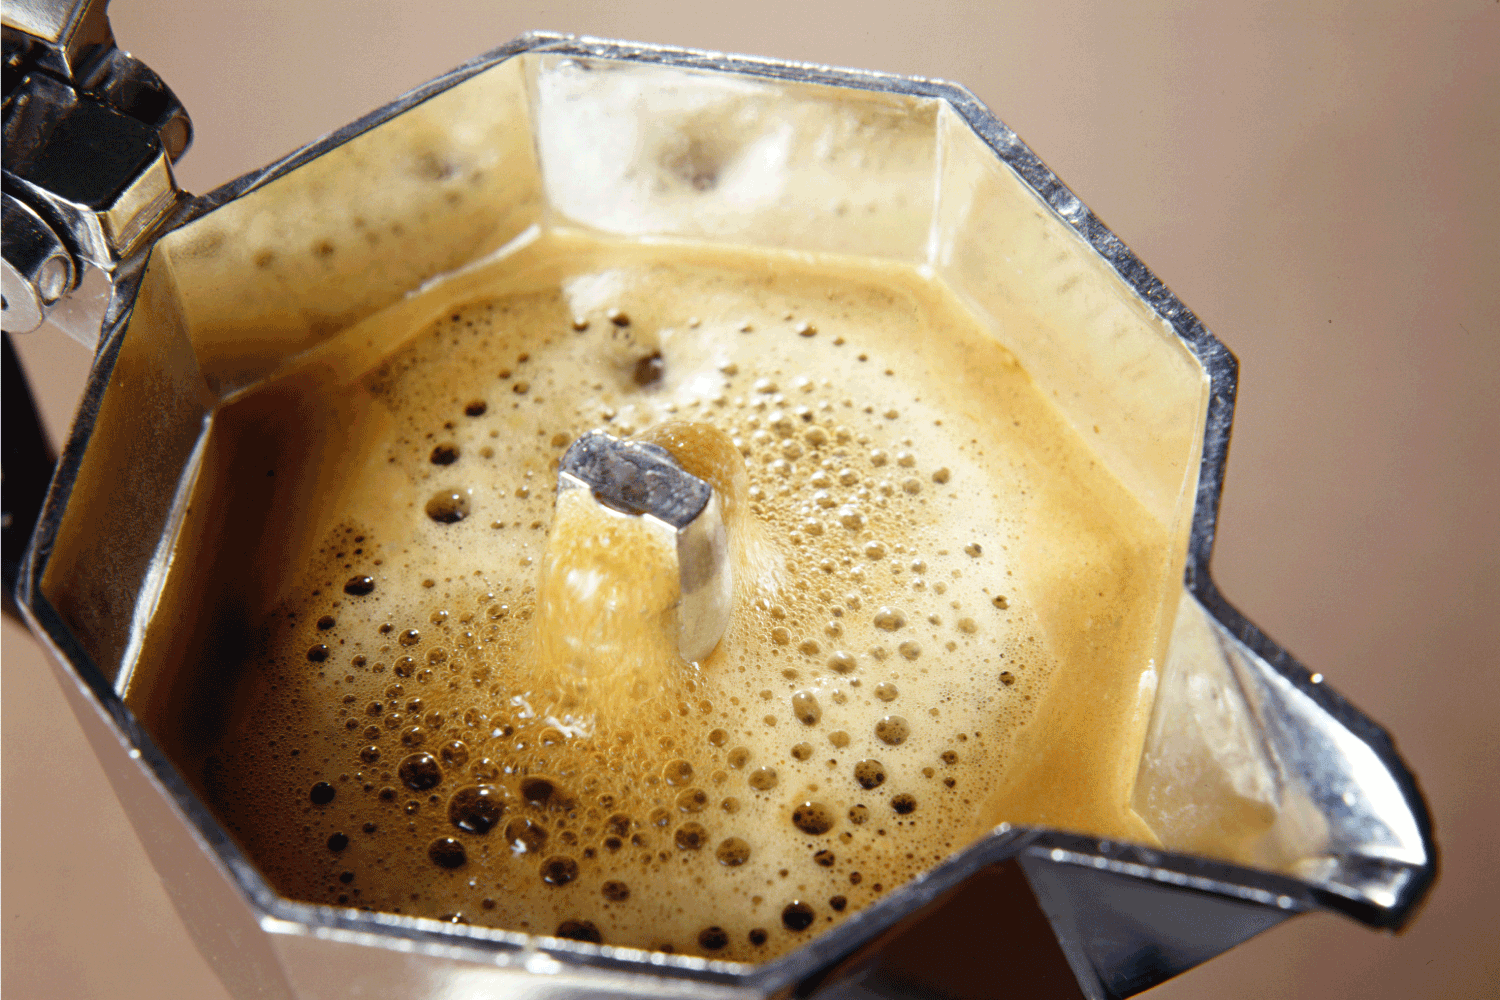 freshly percolated coffee inside a percolator